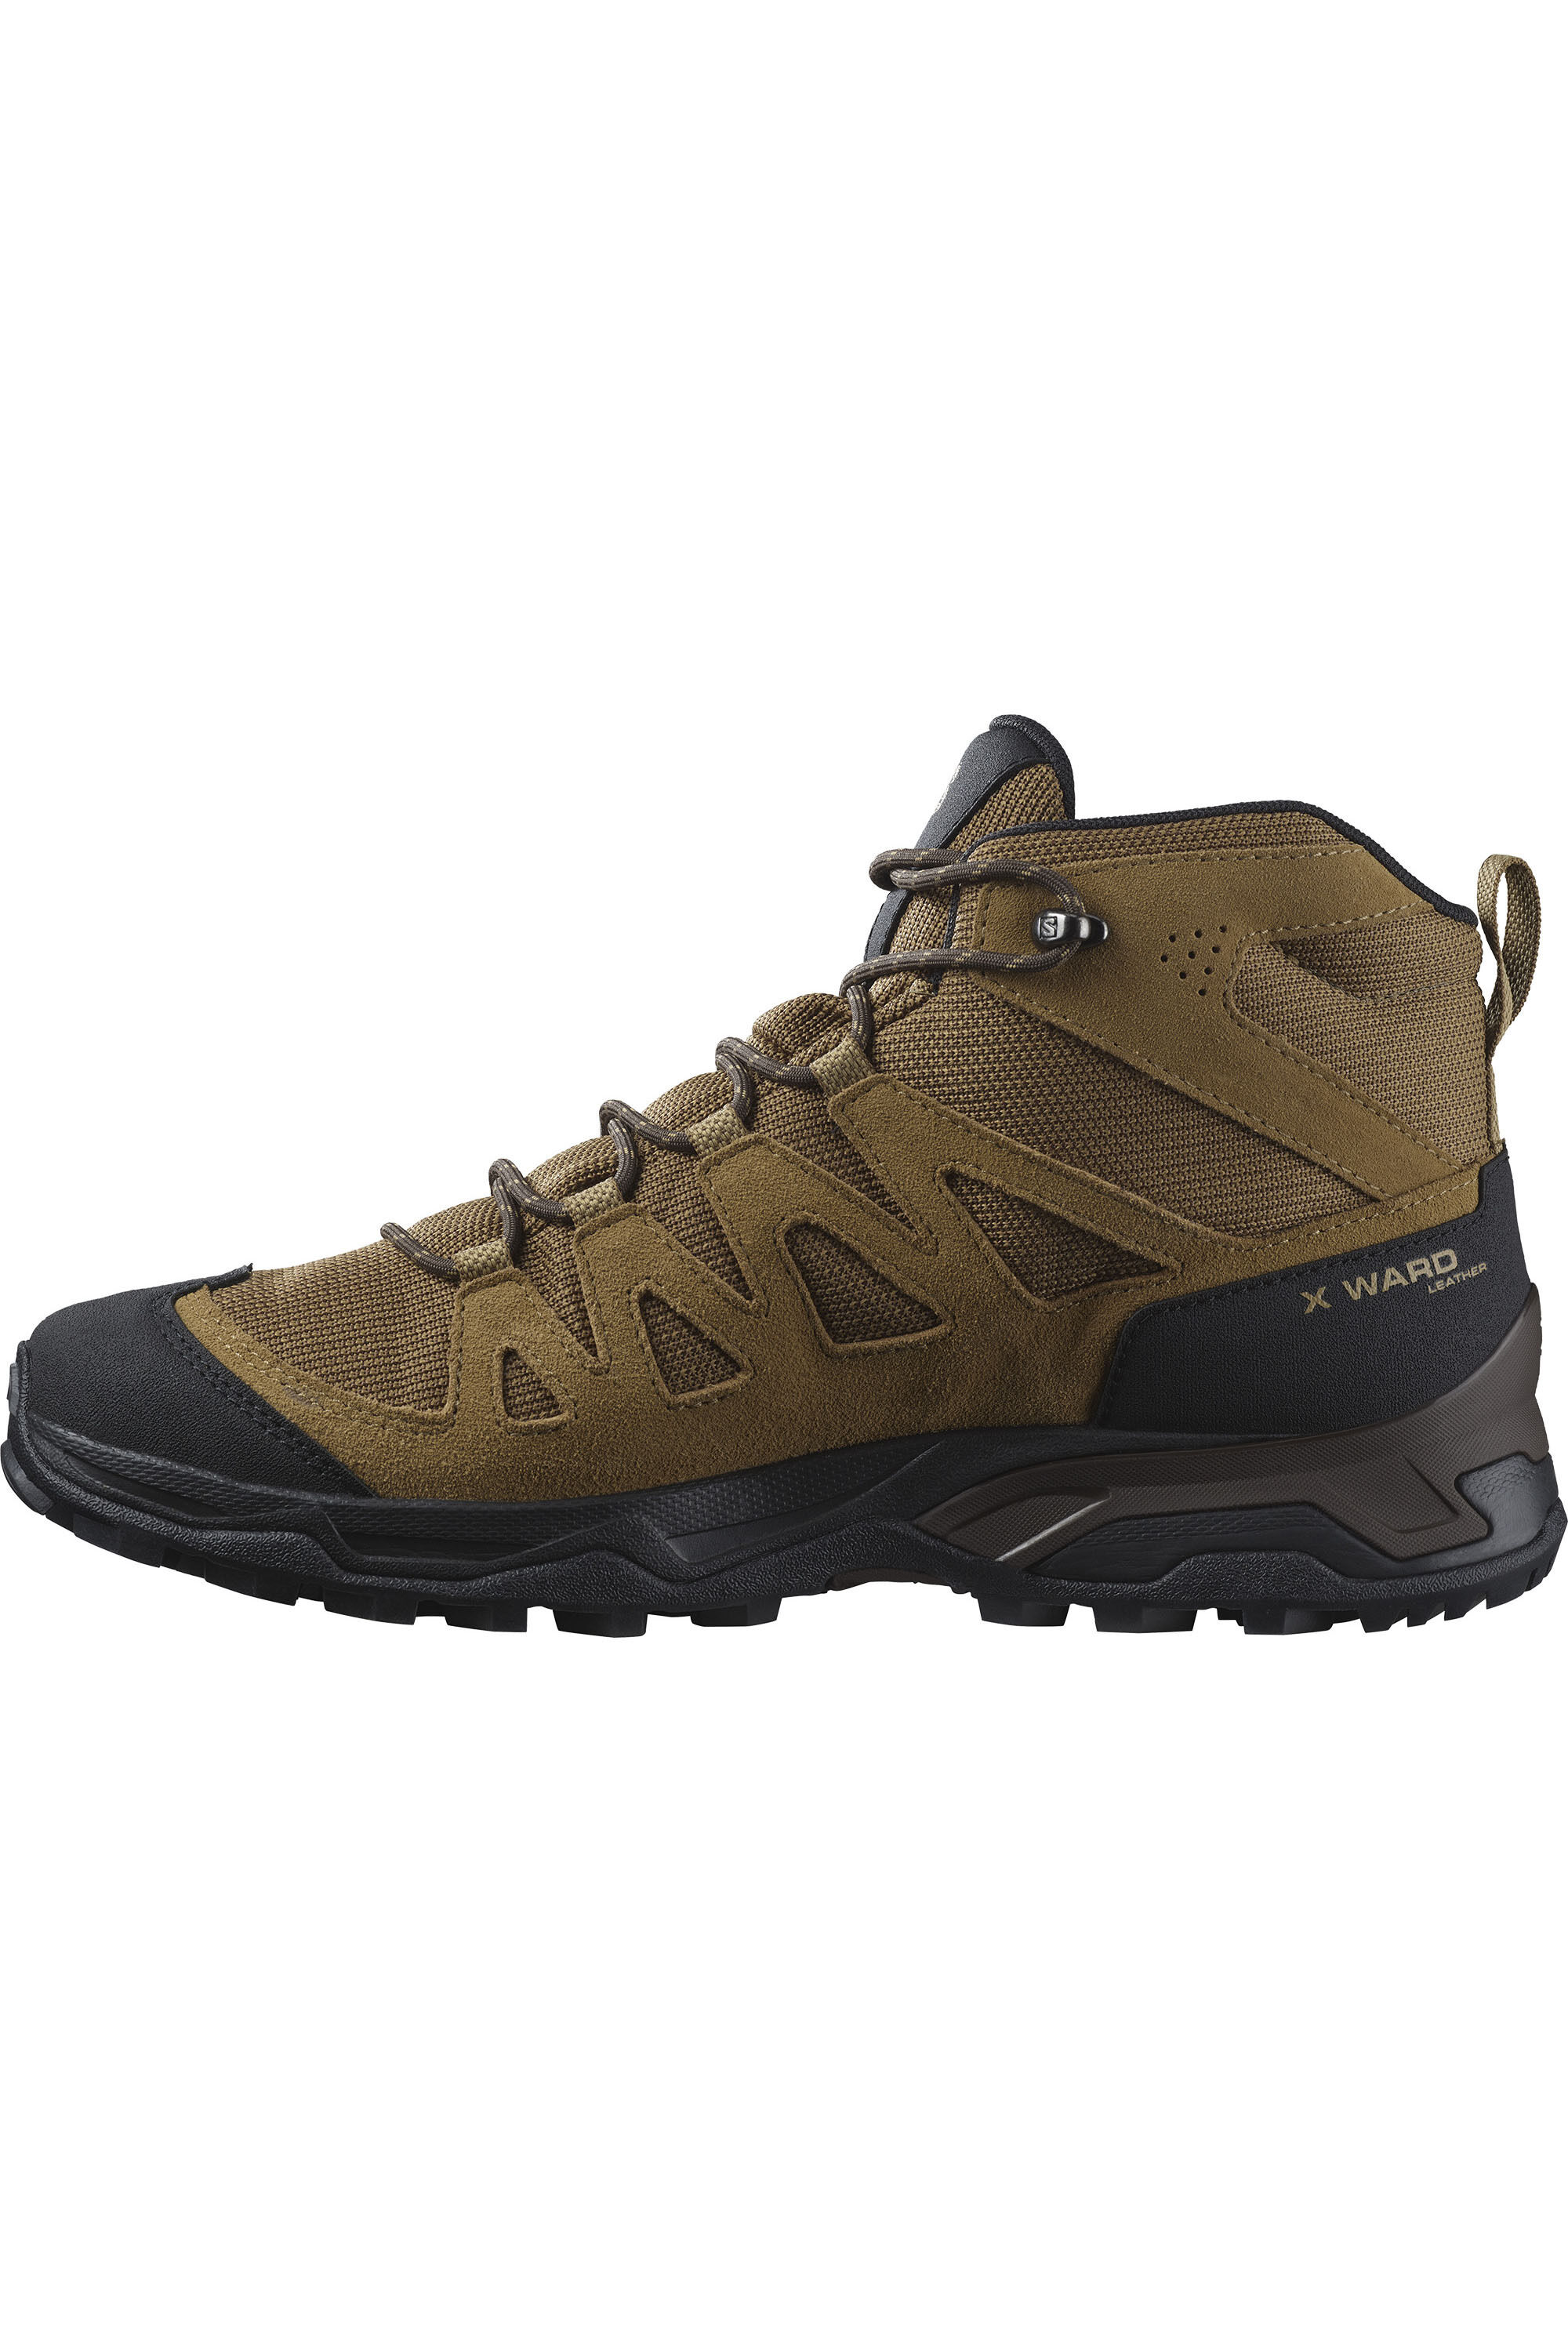 Salomon Men's X Ward Leather GTX Mid Hiking Boots | Macpac